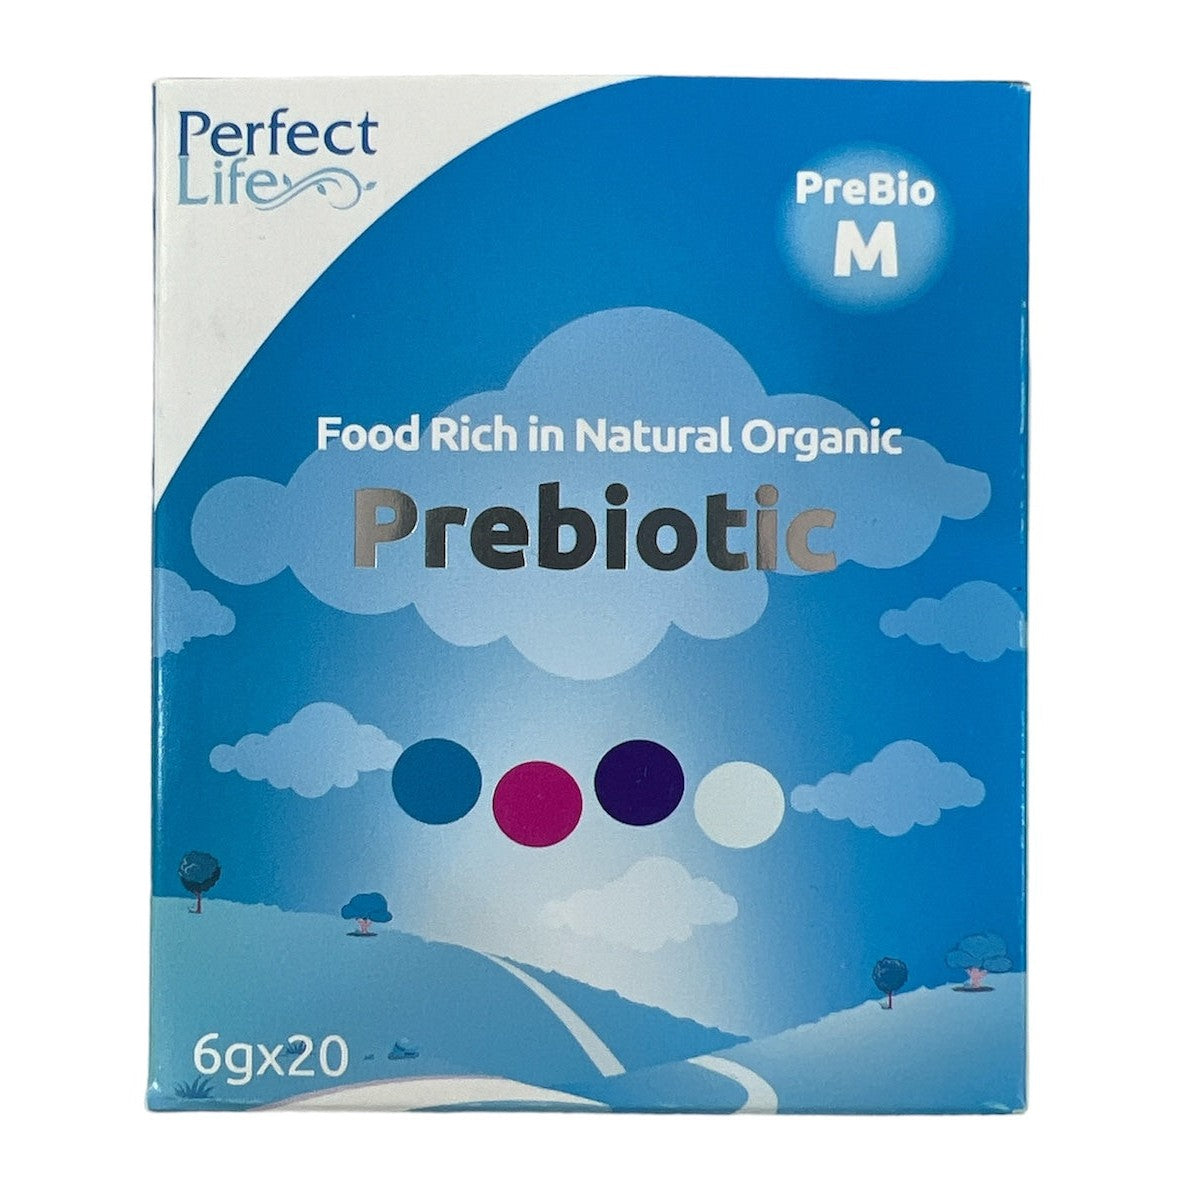 Perfect Life Kids Prebiotics PreBio M 20 bags 6g each